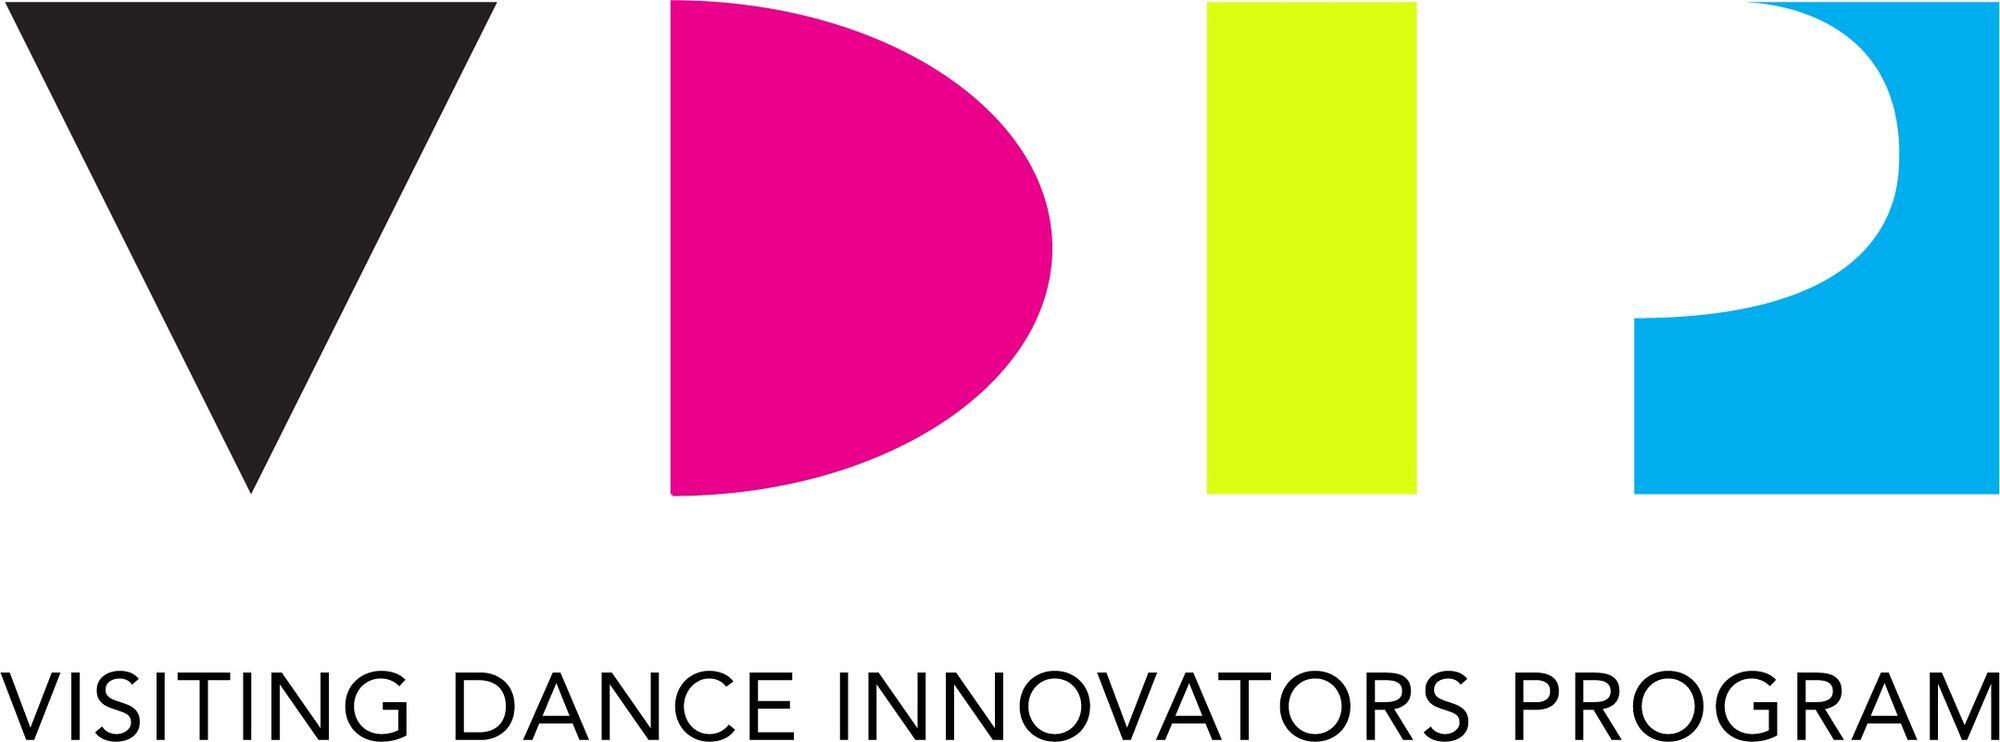 colored letters standing for Visiting Dance Innovators Program